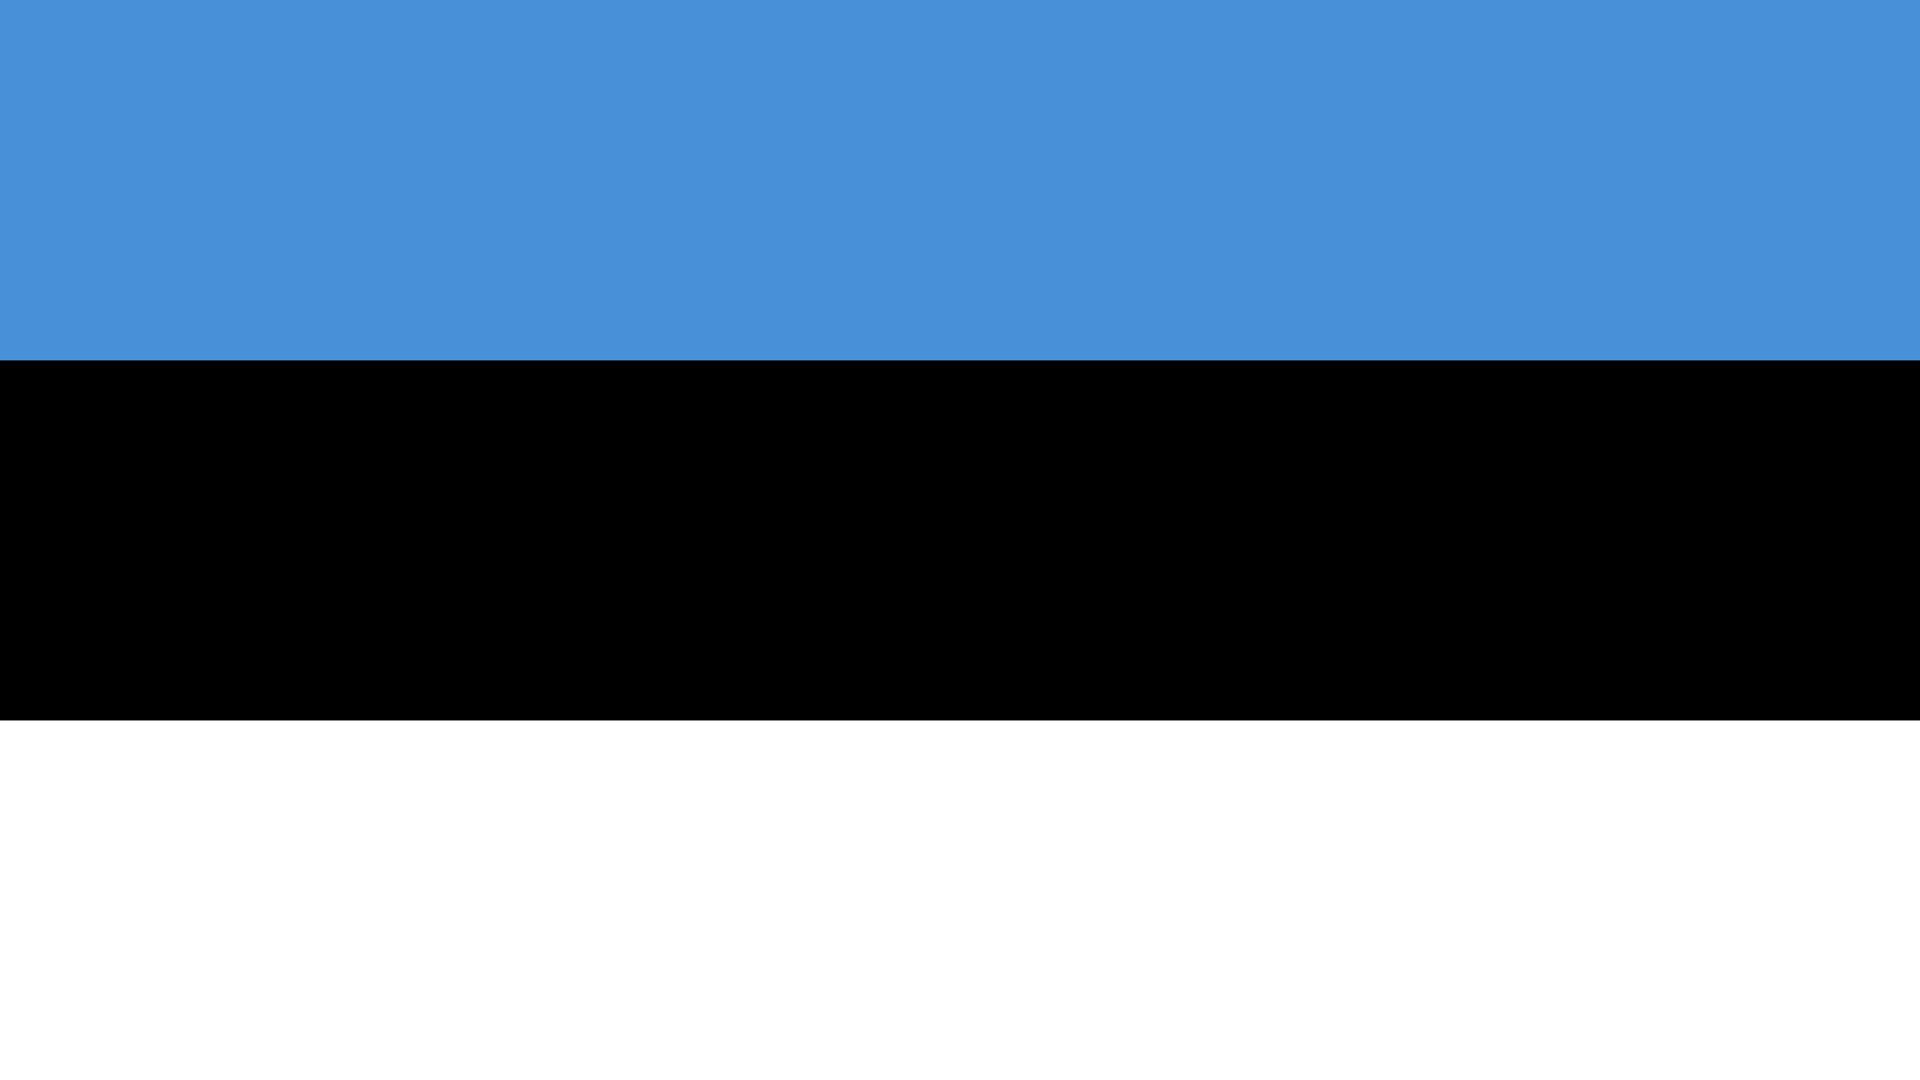 Simple Estonia Flag Wallpaper 51634 1920x1080px